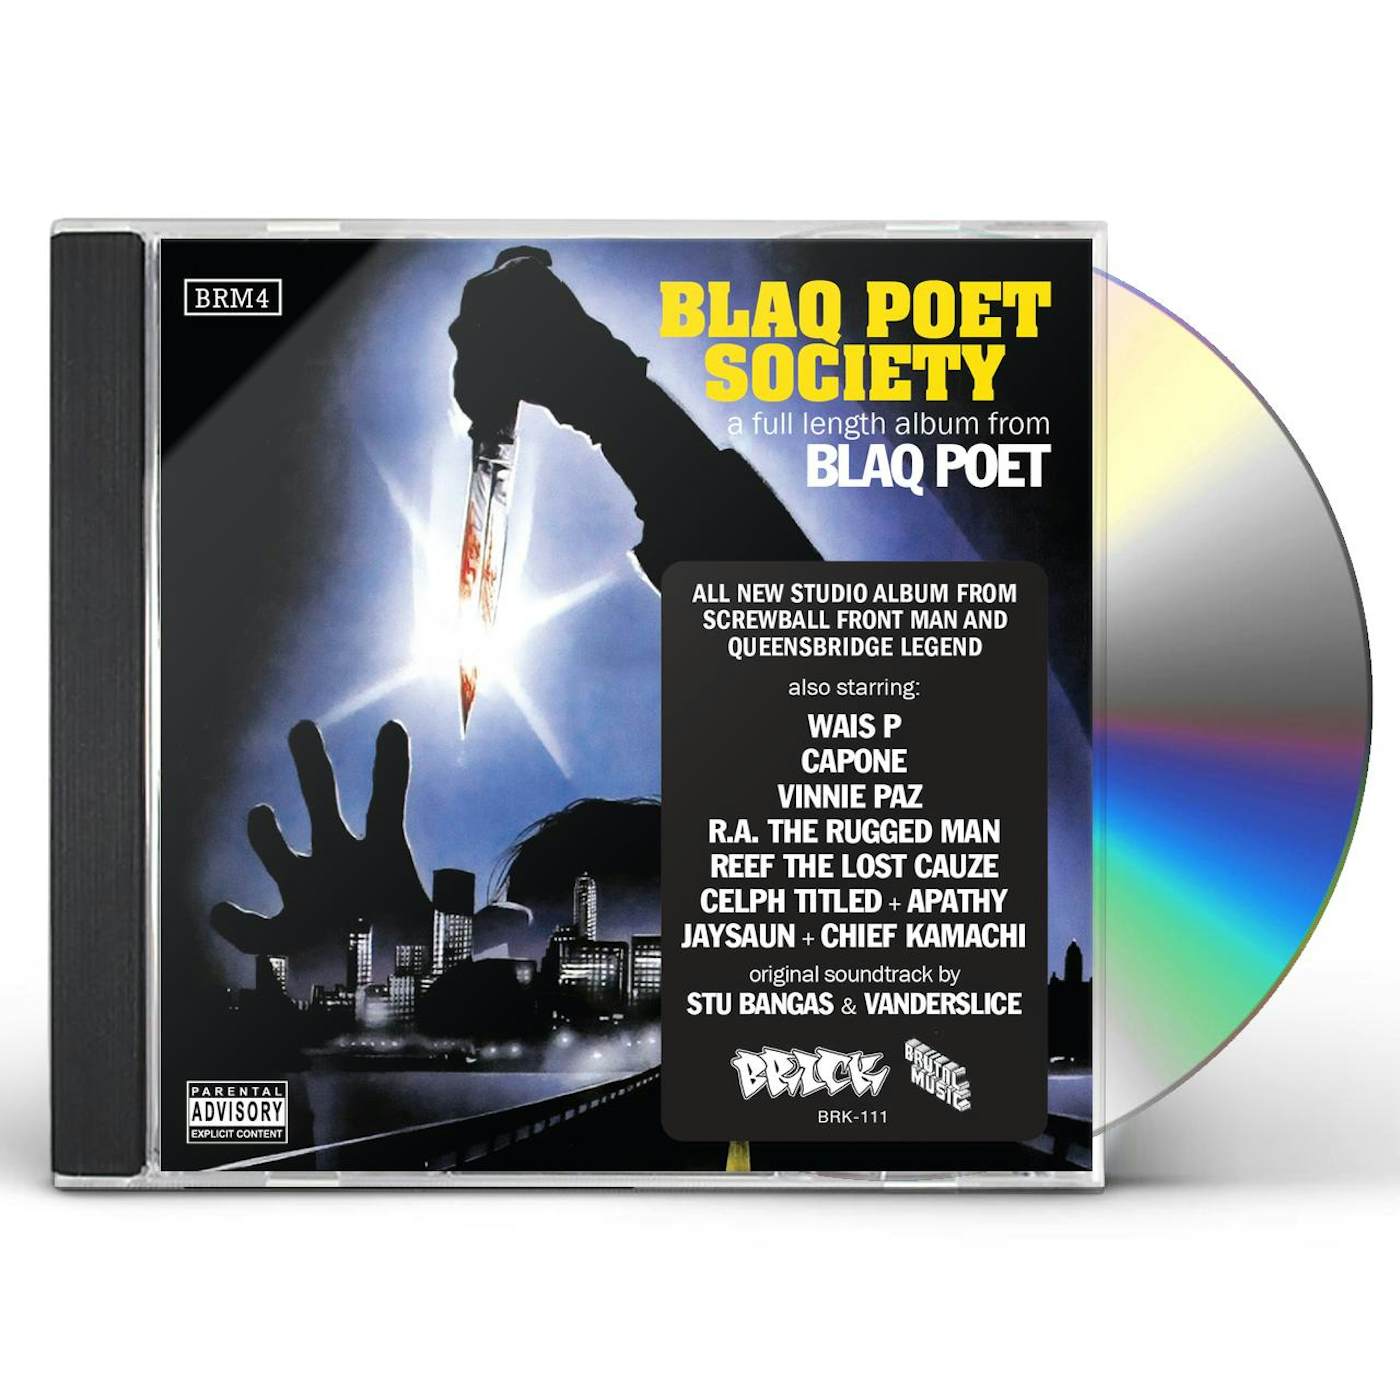 BLAQ POET SOCIETY CD